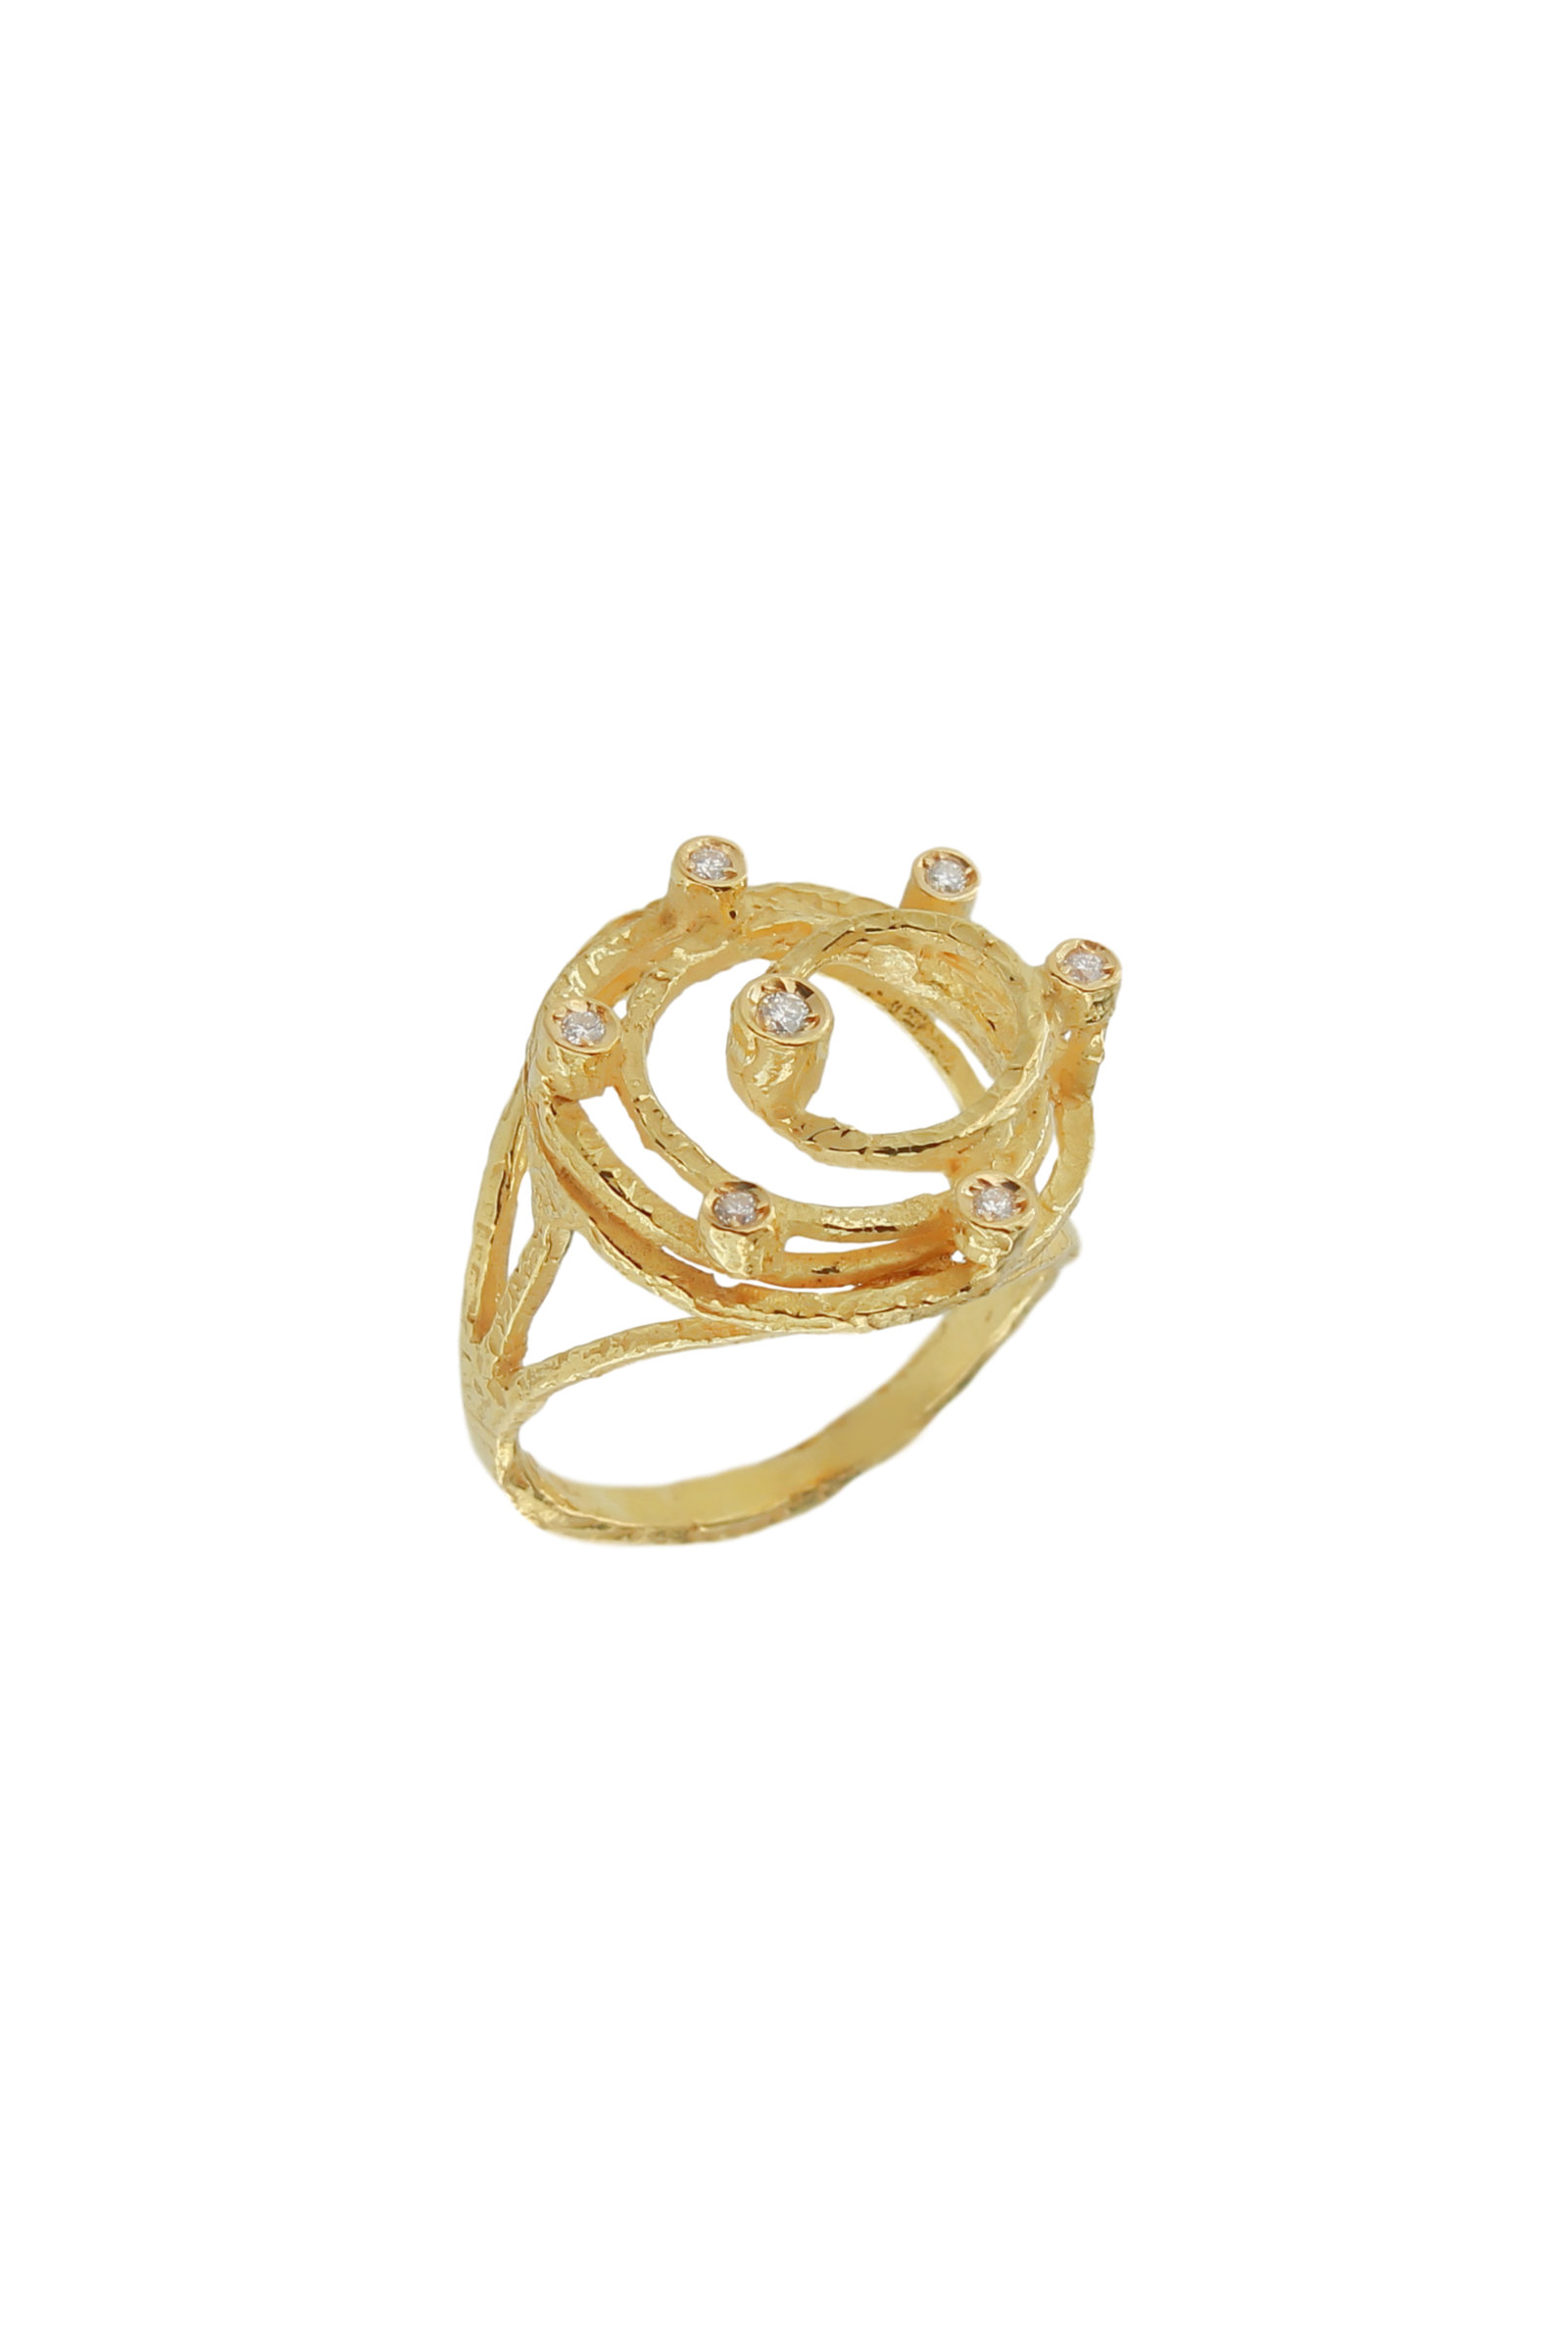 SE304BT-18-Kt-Yellow-Gold-Orbit-Ring-with-Diamonds-1